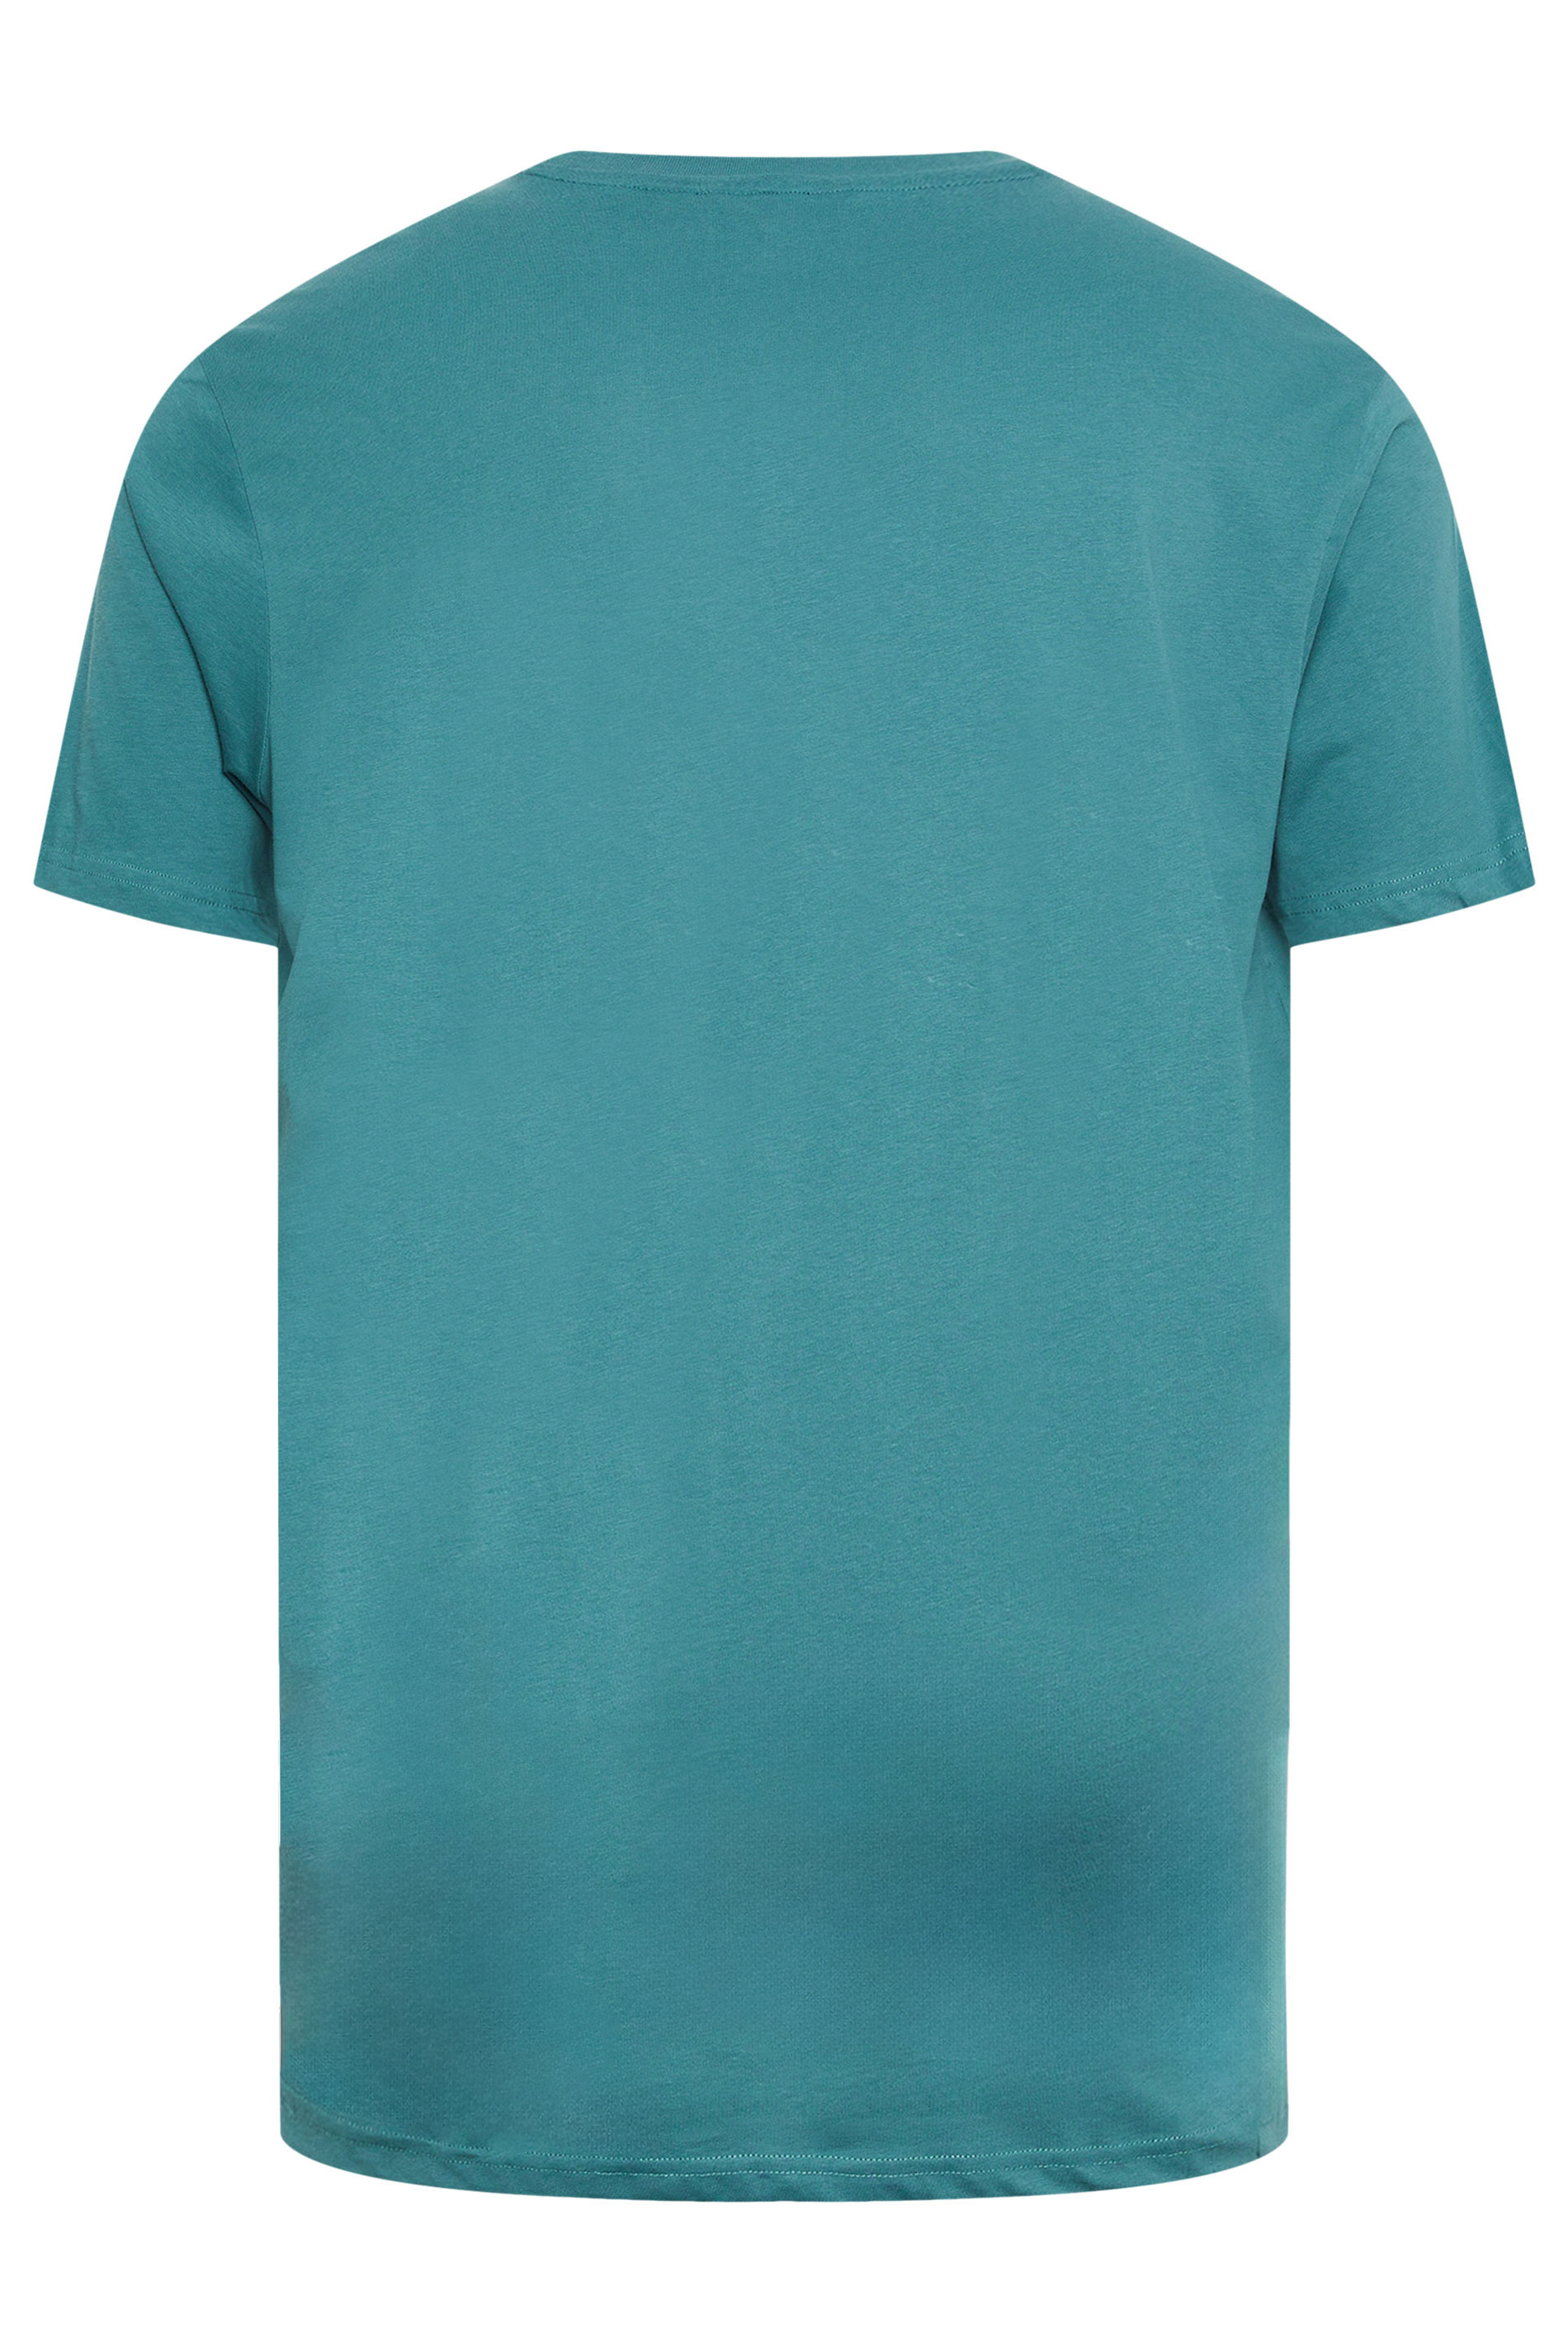 BEN SHERMAN Big & Tall Teal Blue 'Feel The Groove' T-Shirt 3